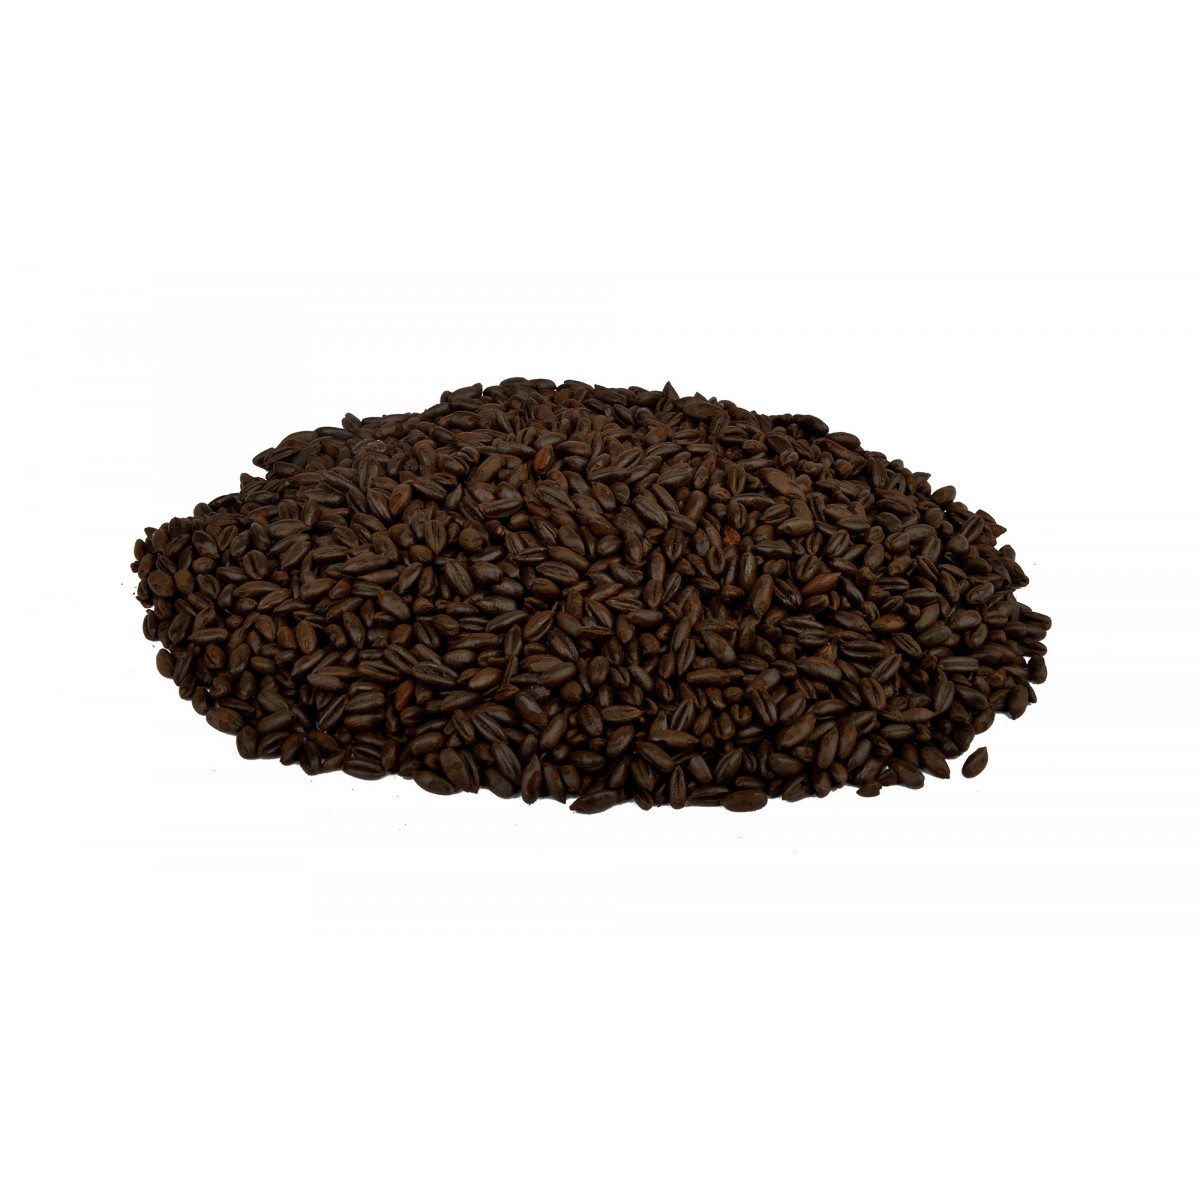 Weyermann®  chocolate roggemout 500-800 EBC 1 kg